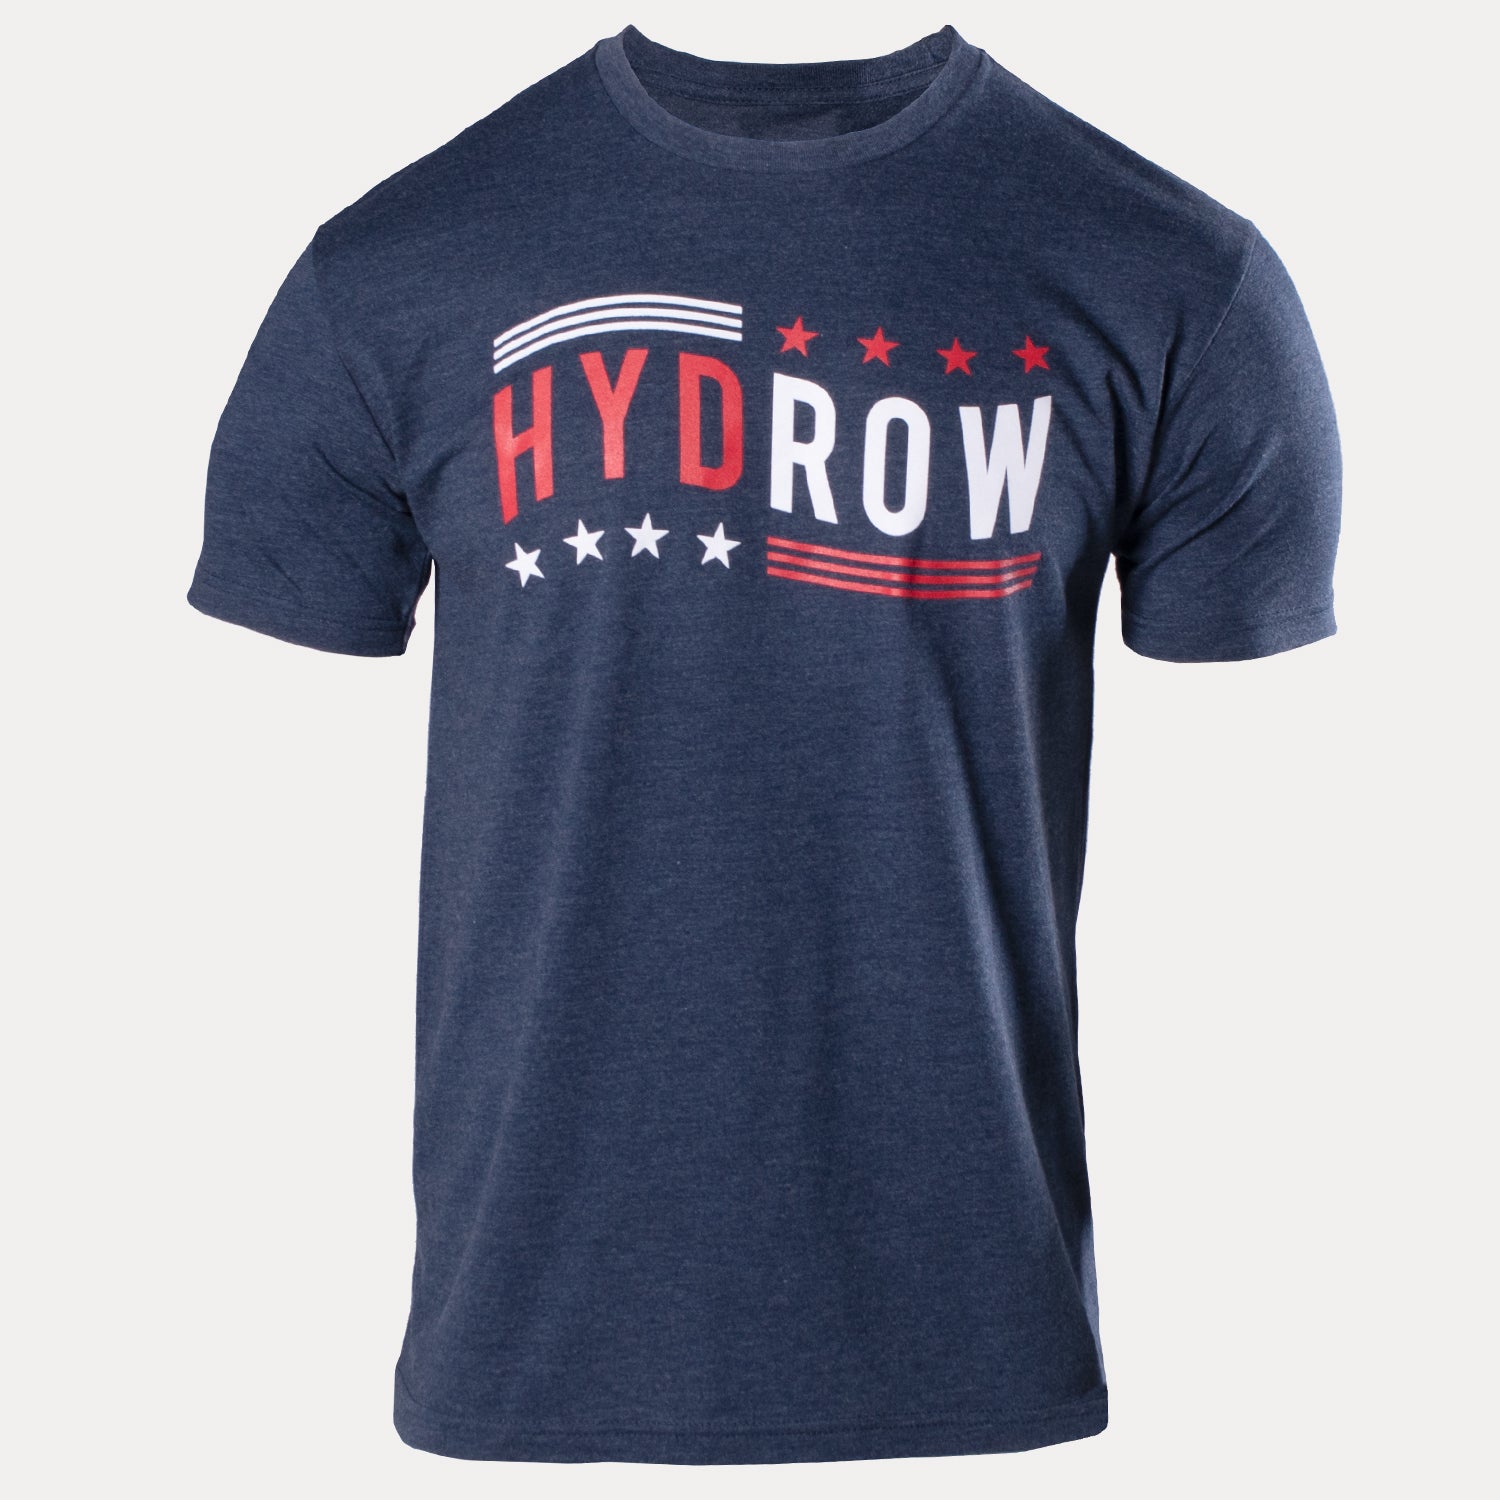 Hydrow Linear Logo Paragon Performance 1/4 Zip - Hydrow Apparel Store